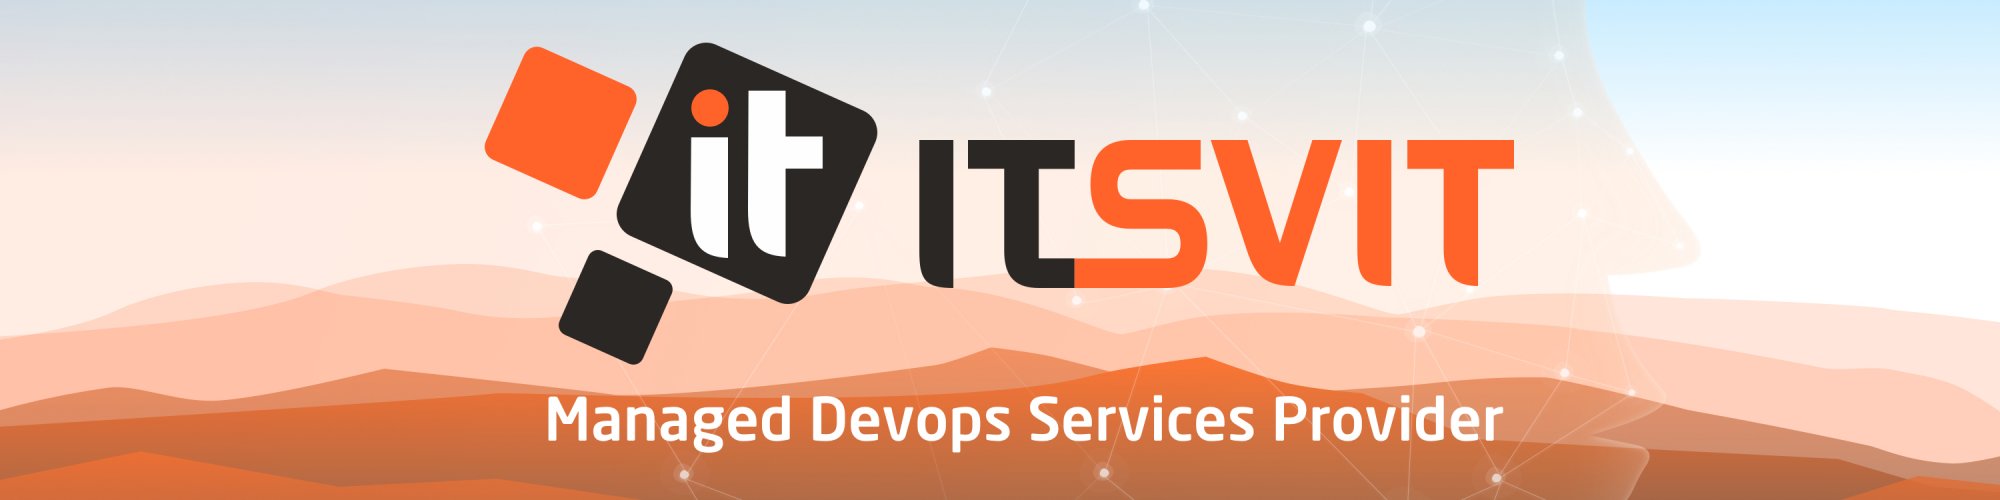 IT Svit - DevOps Managed Services Provider